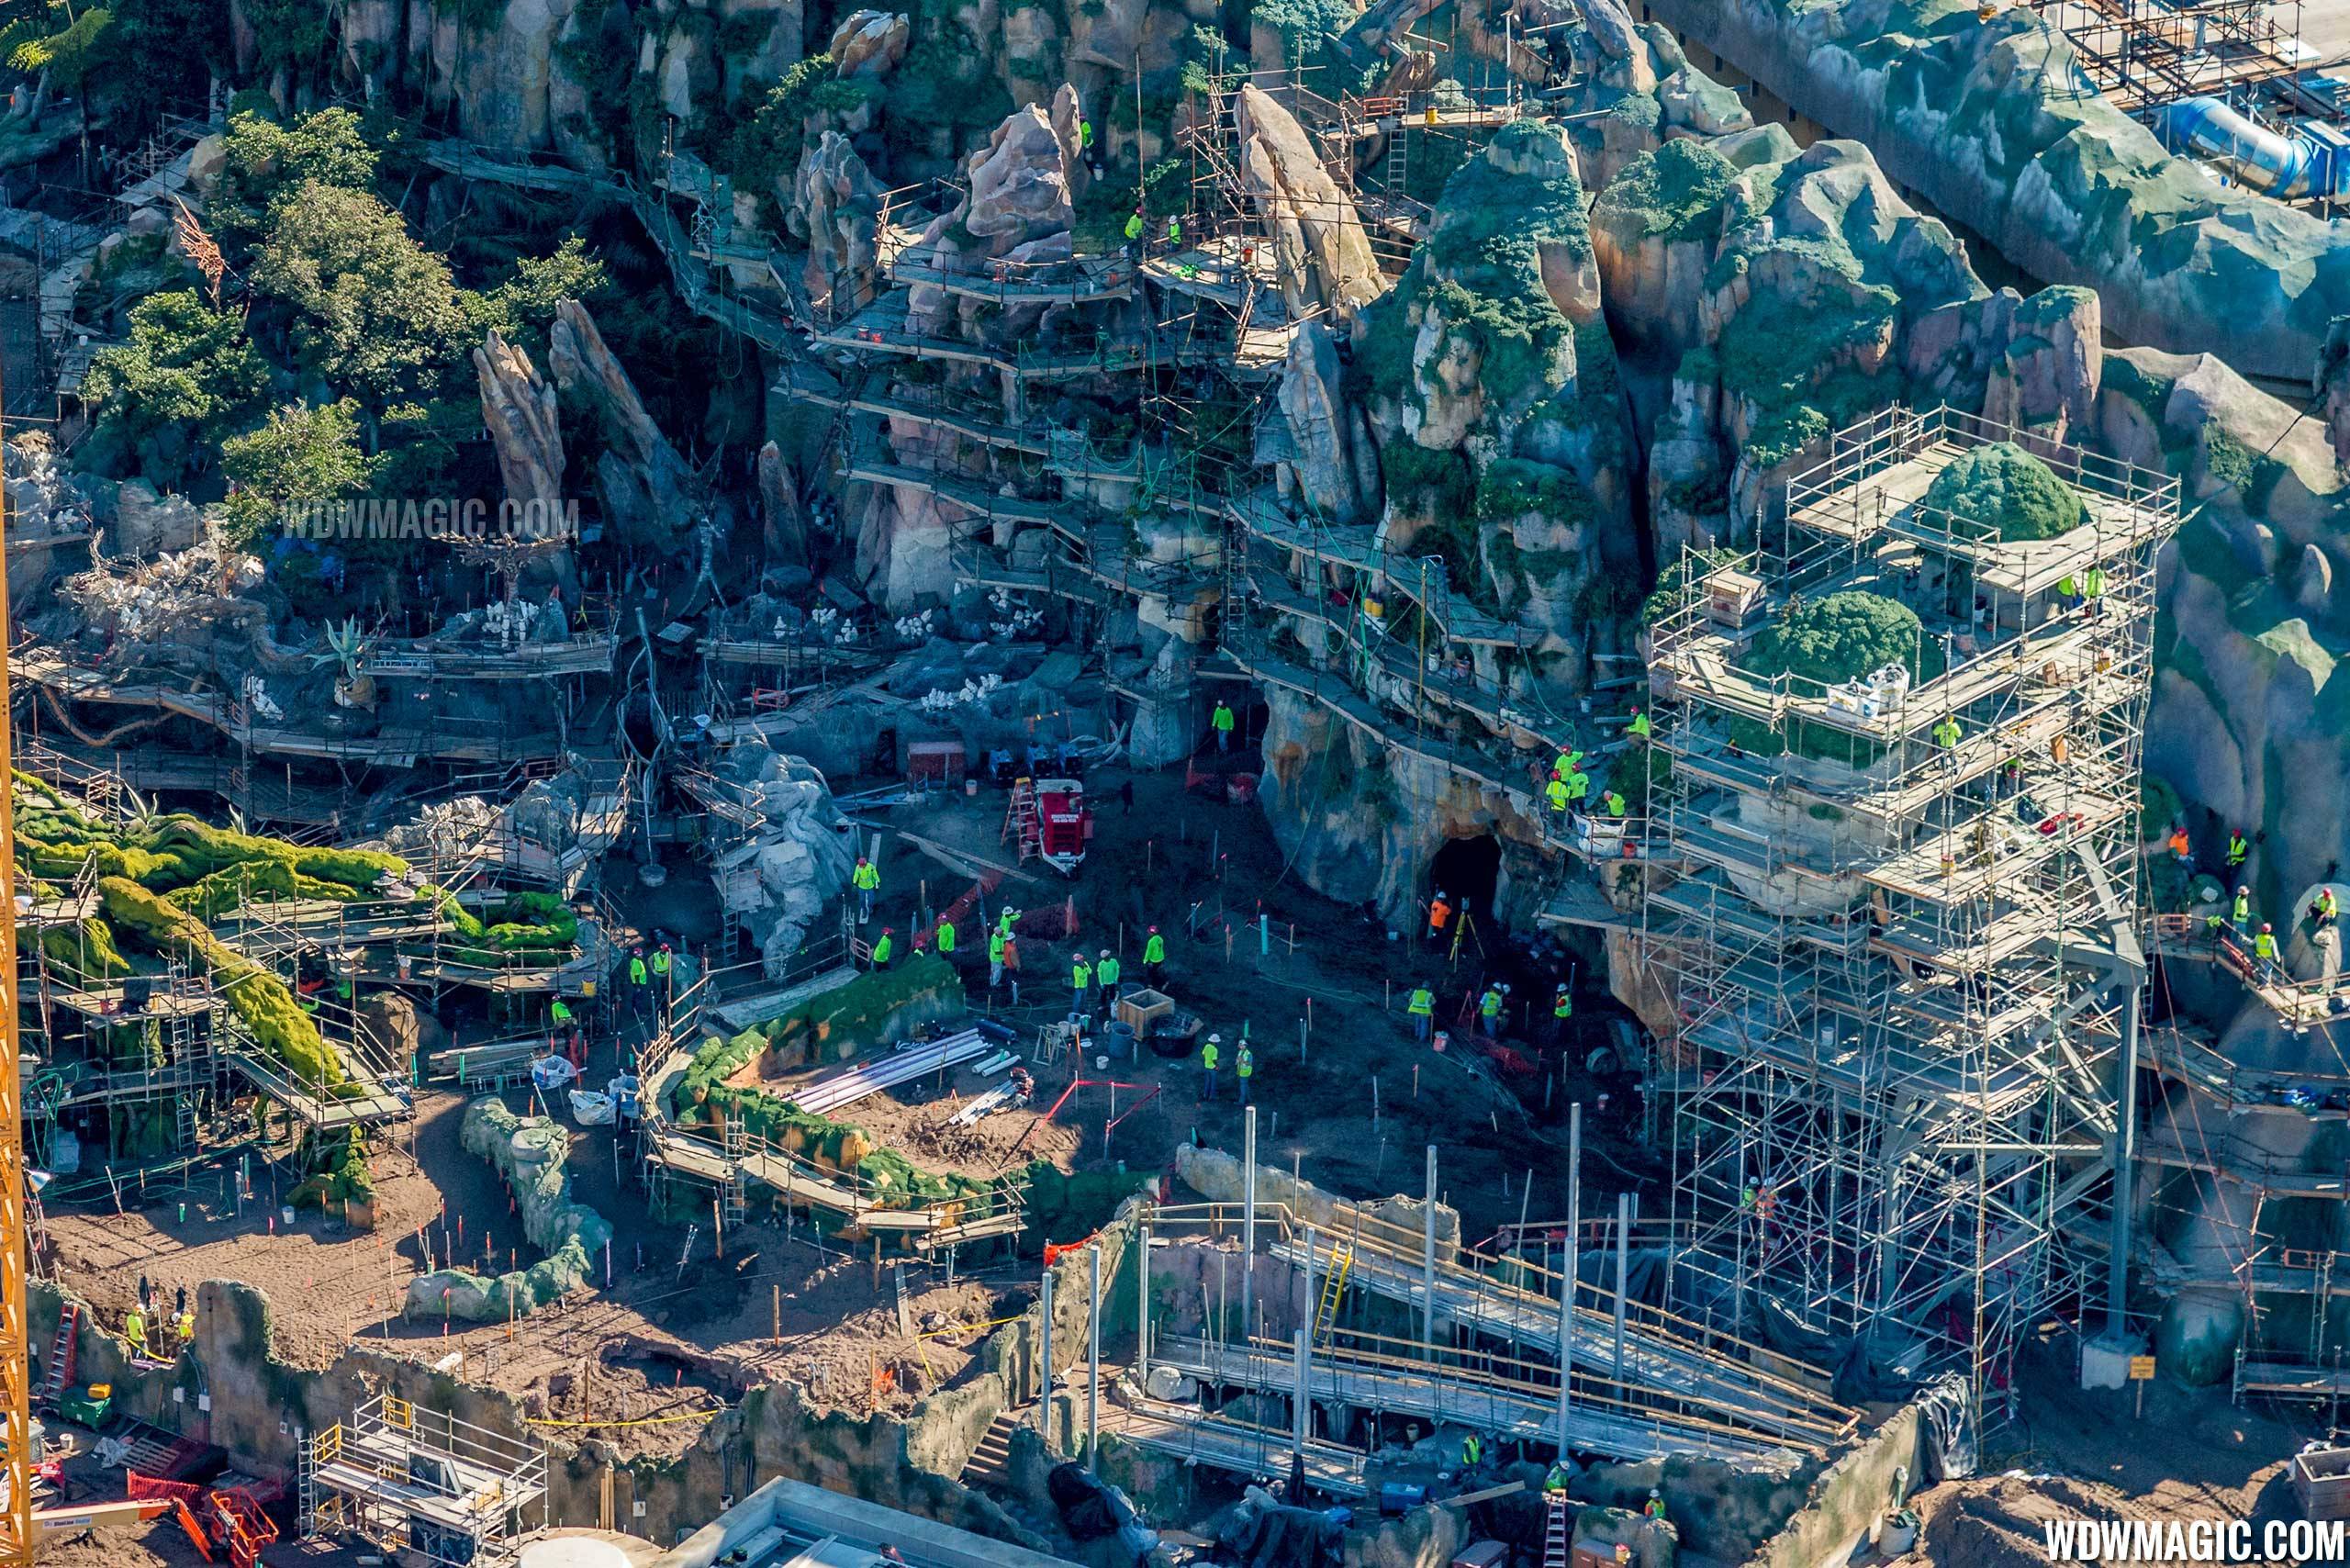 Photo by CJ Berzin @BerzinPhotography. 'Pandora - The World of Avatar' aerial view.